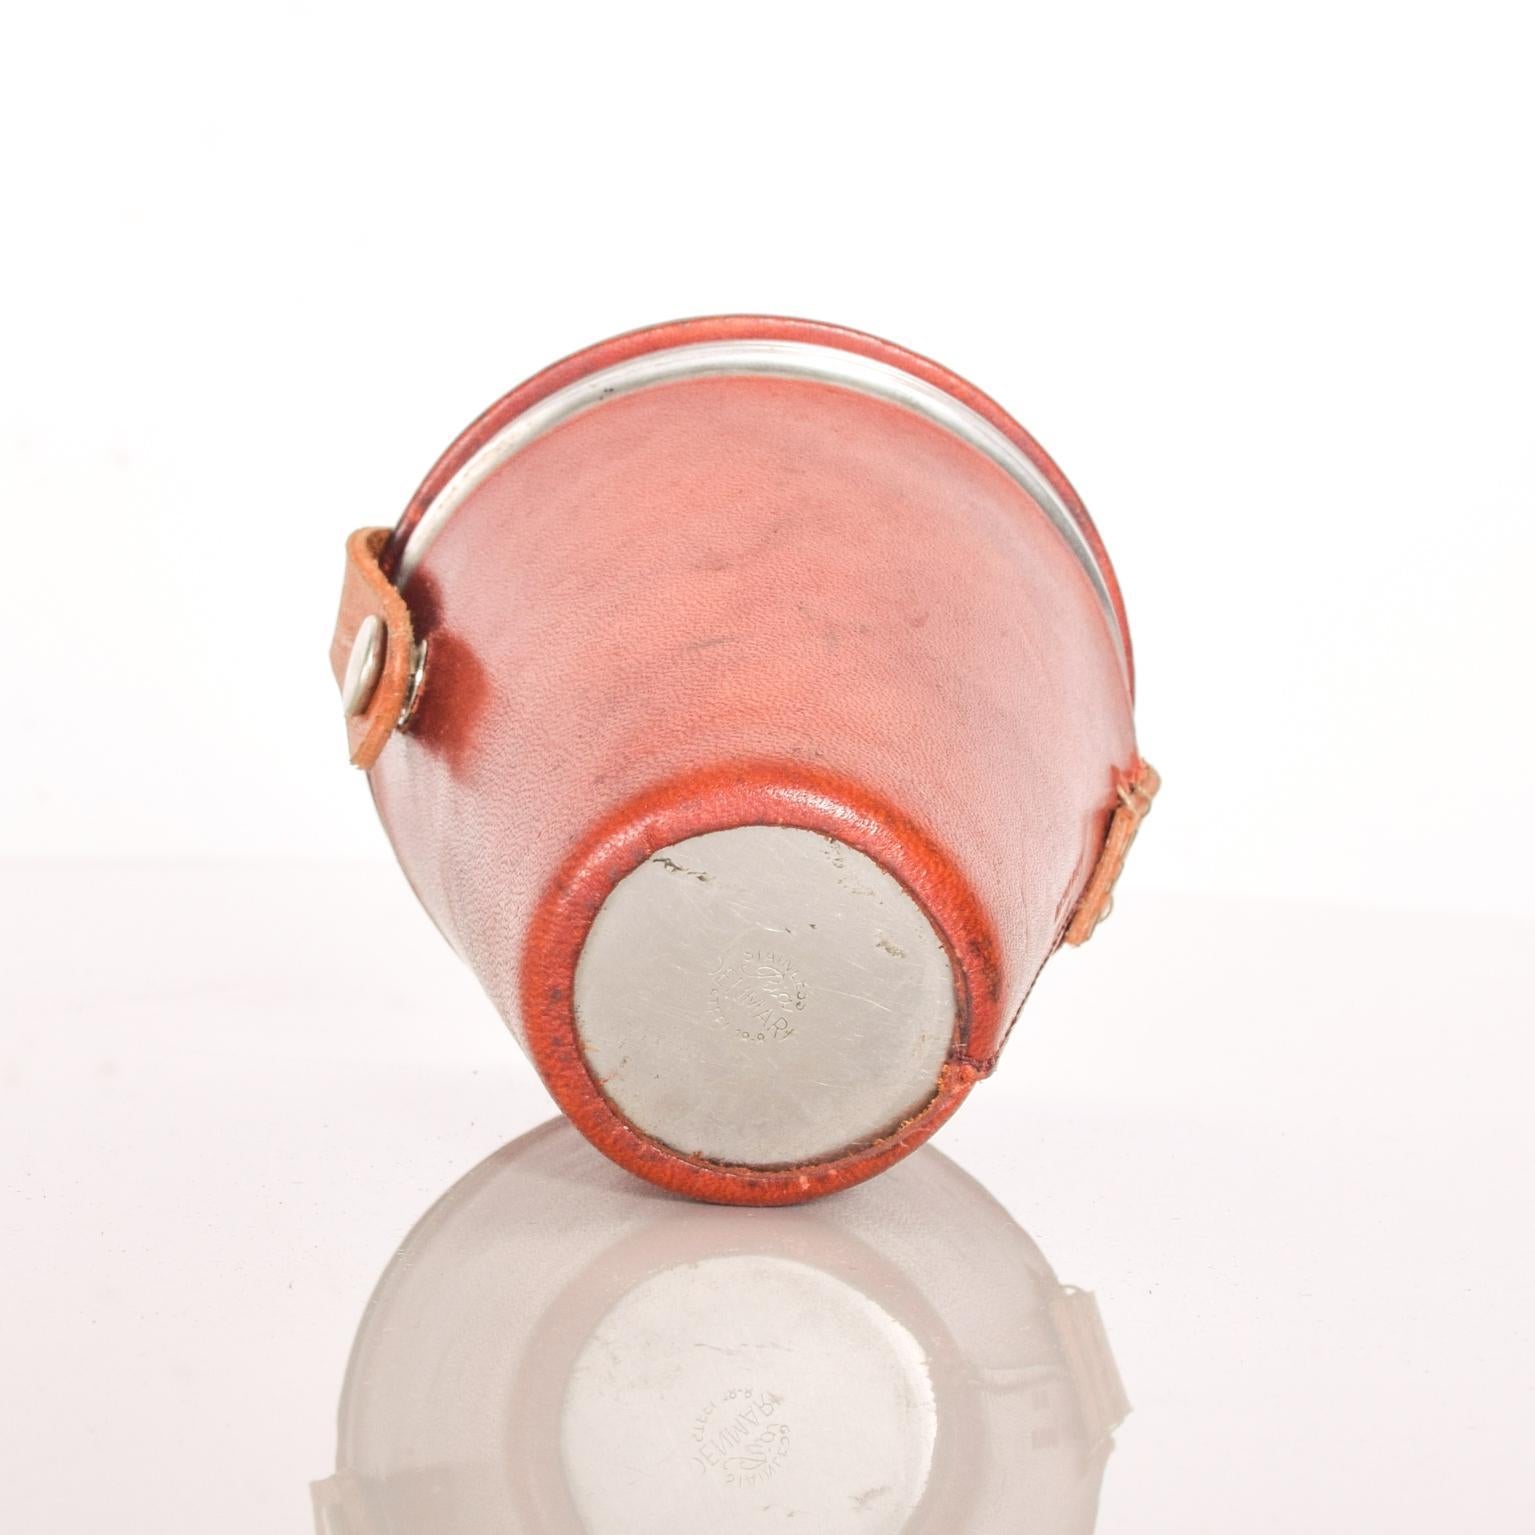 stirrup cups in leather case